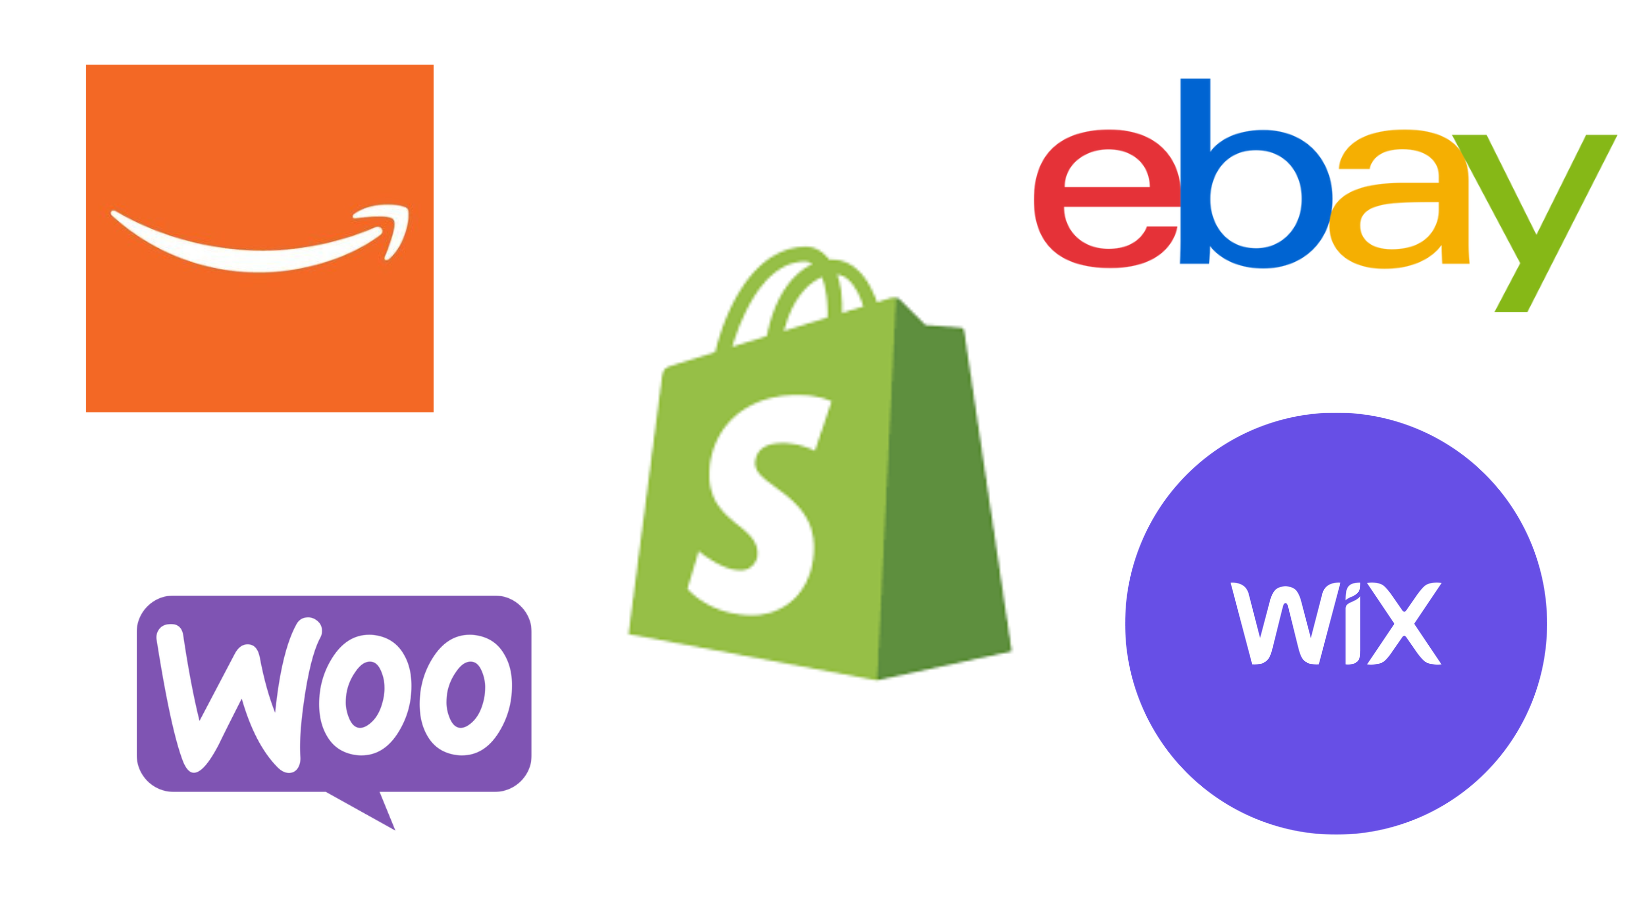 e-commerce platforms